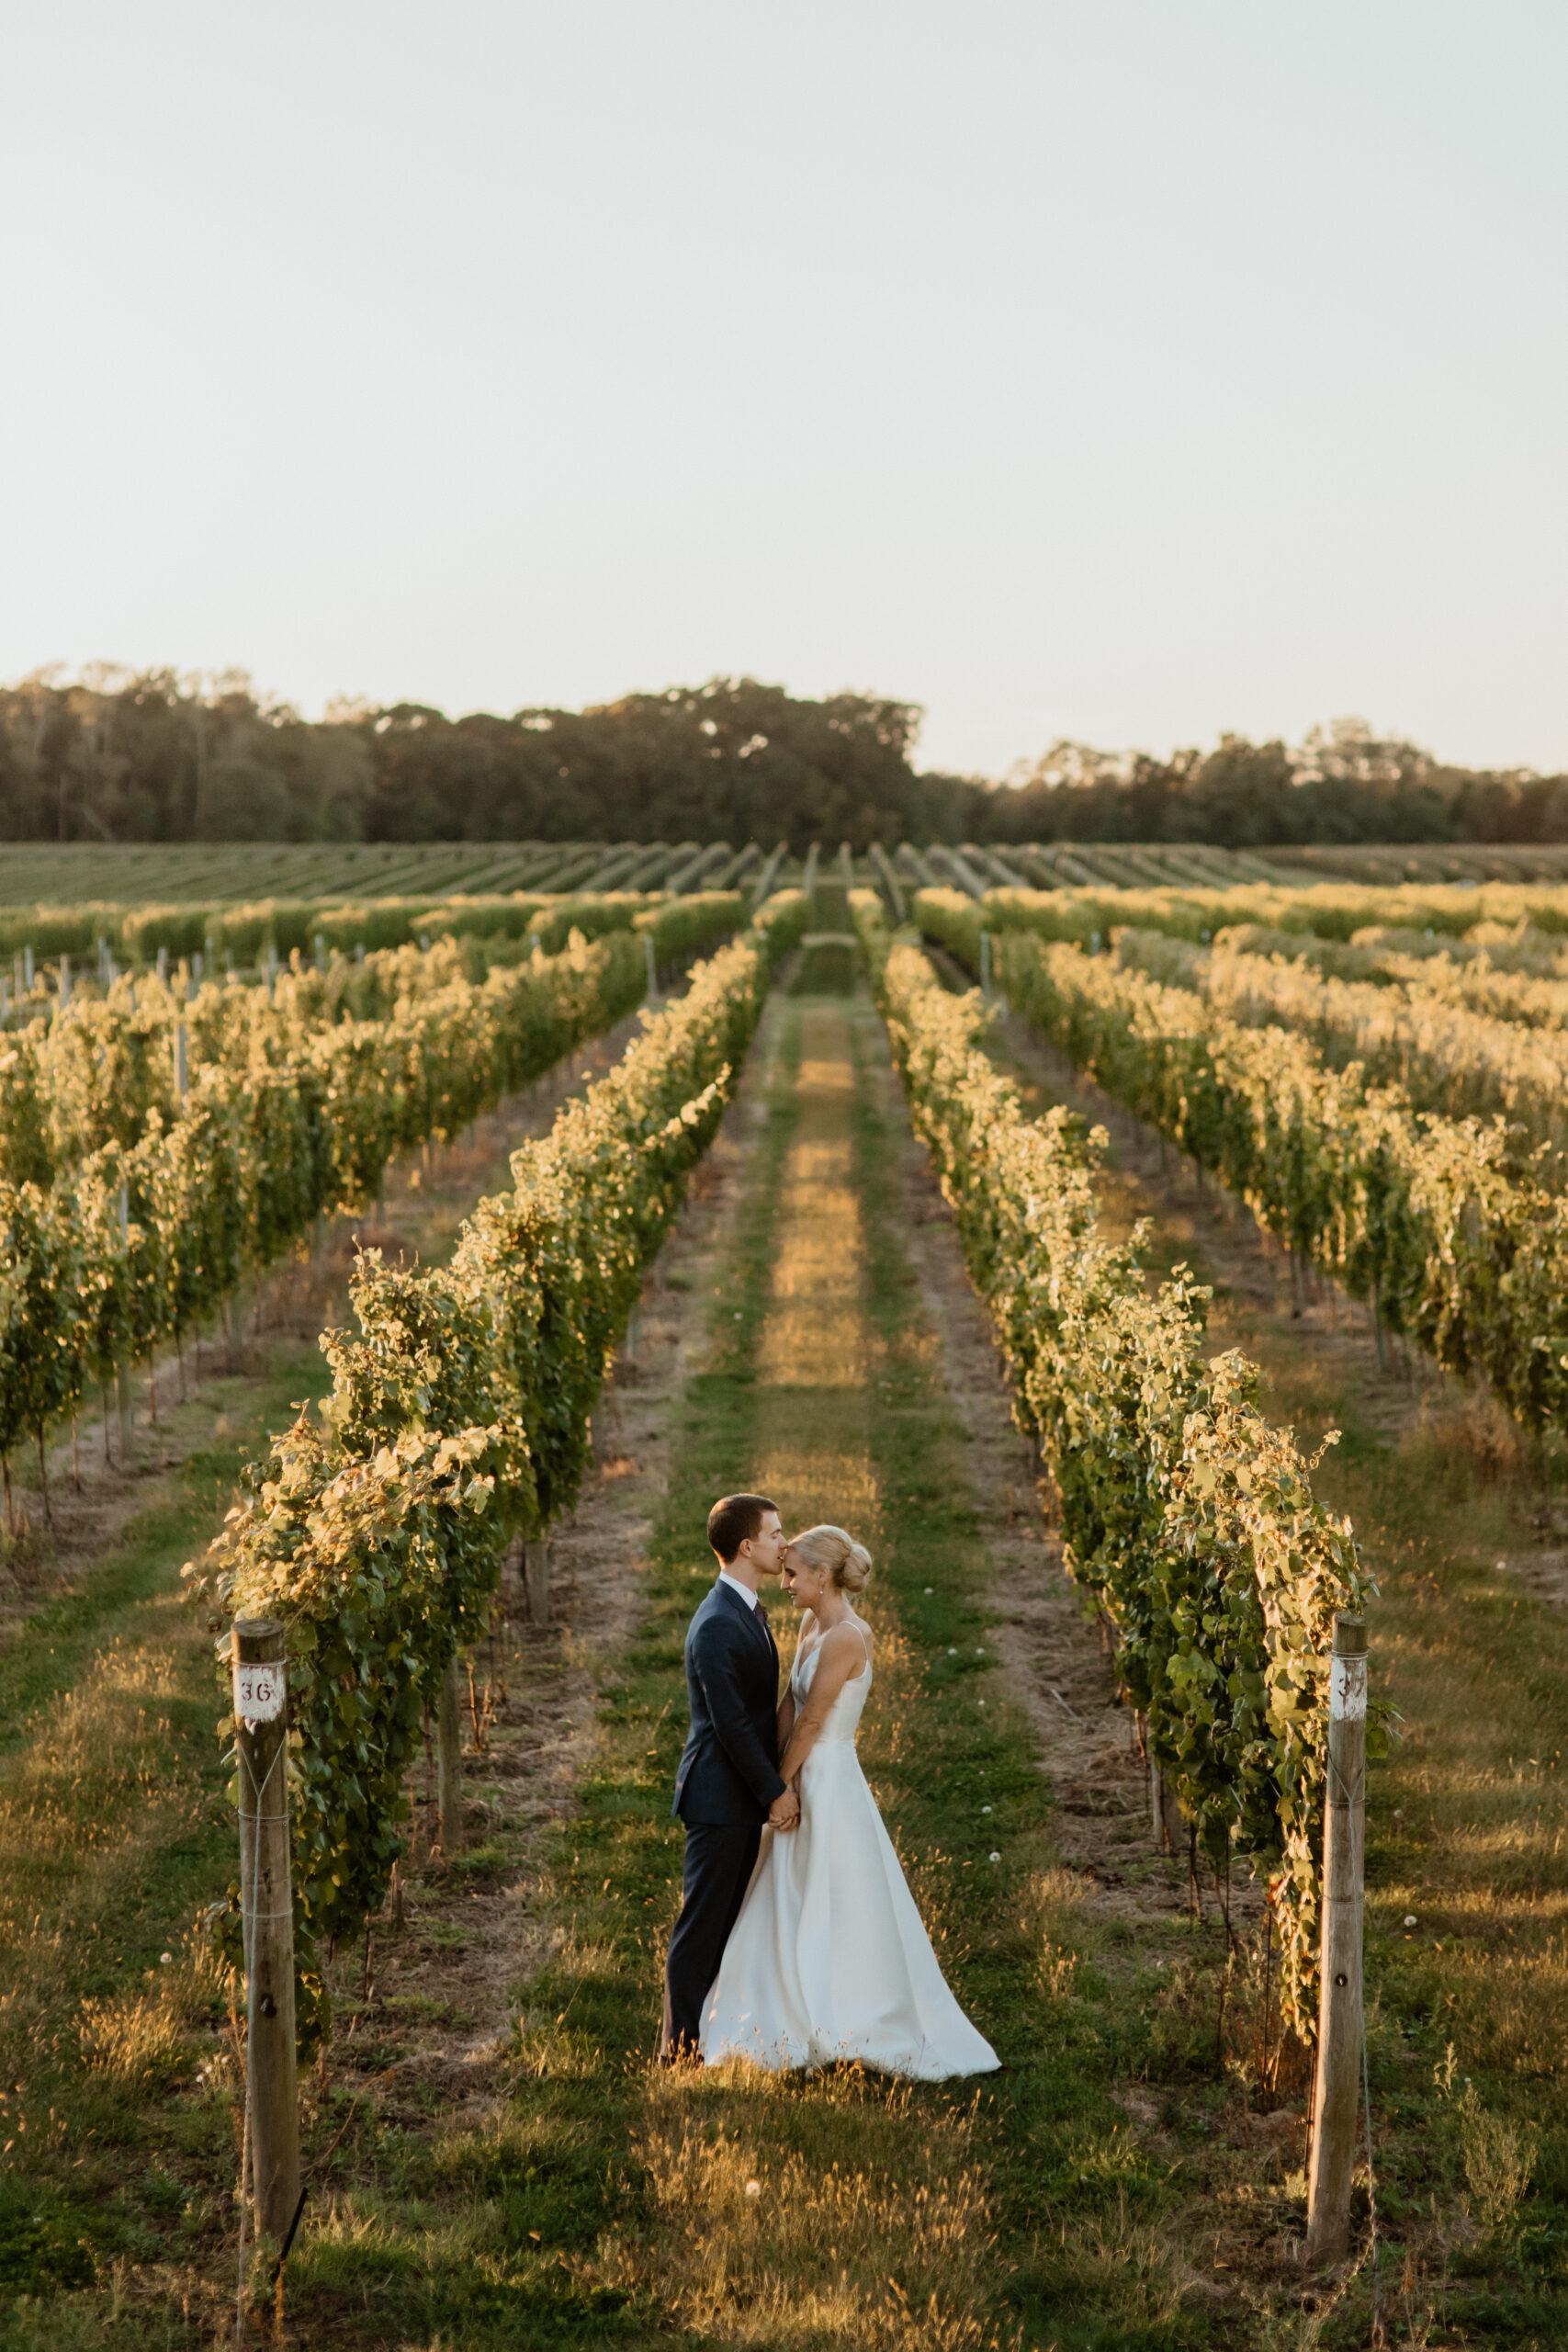 Stunning bride and groom pose in between vineyard rows in scenic Bedell Cellars wedding